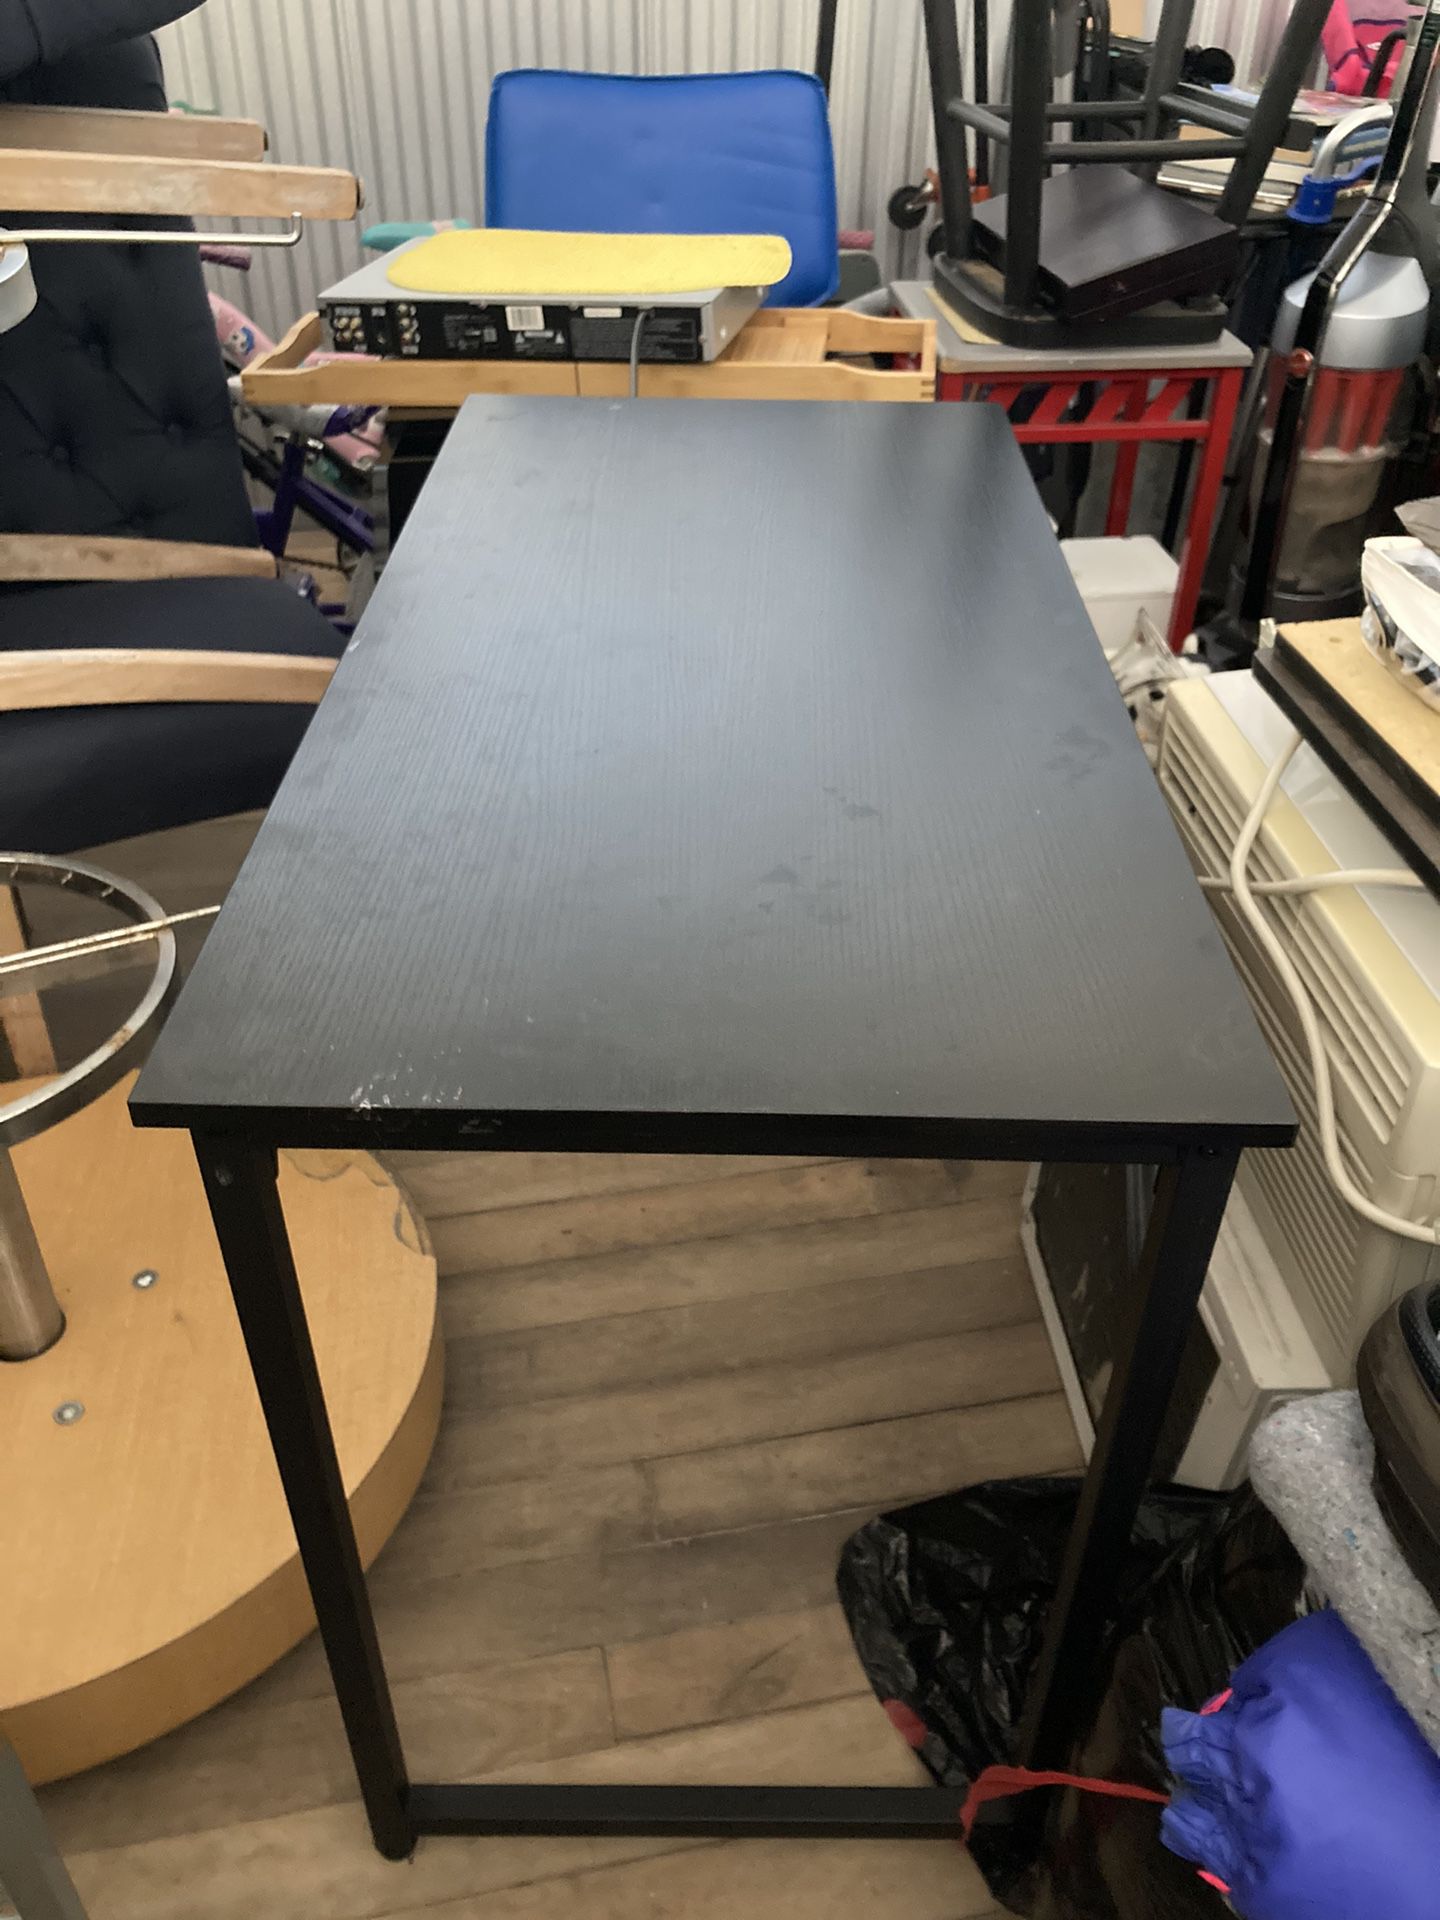 Table/desk